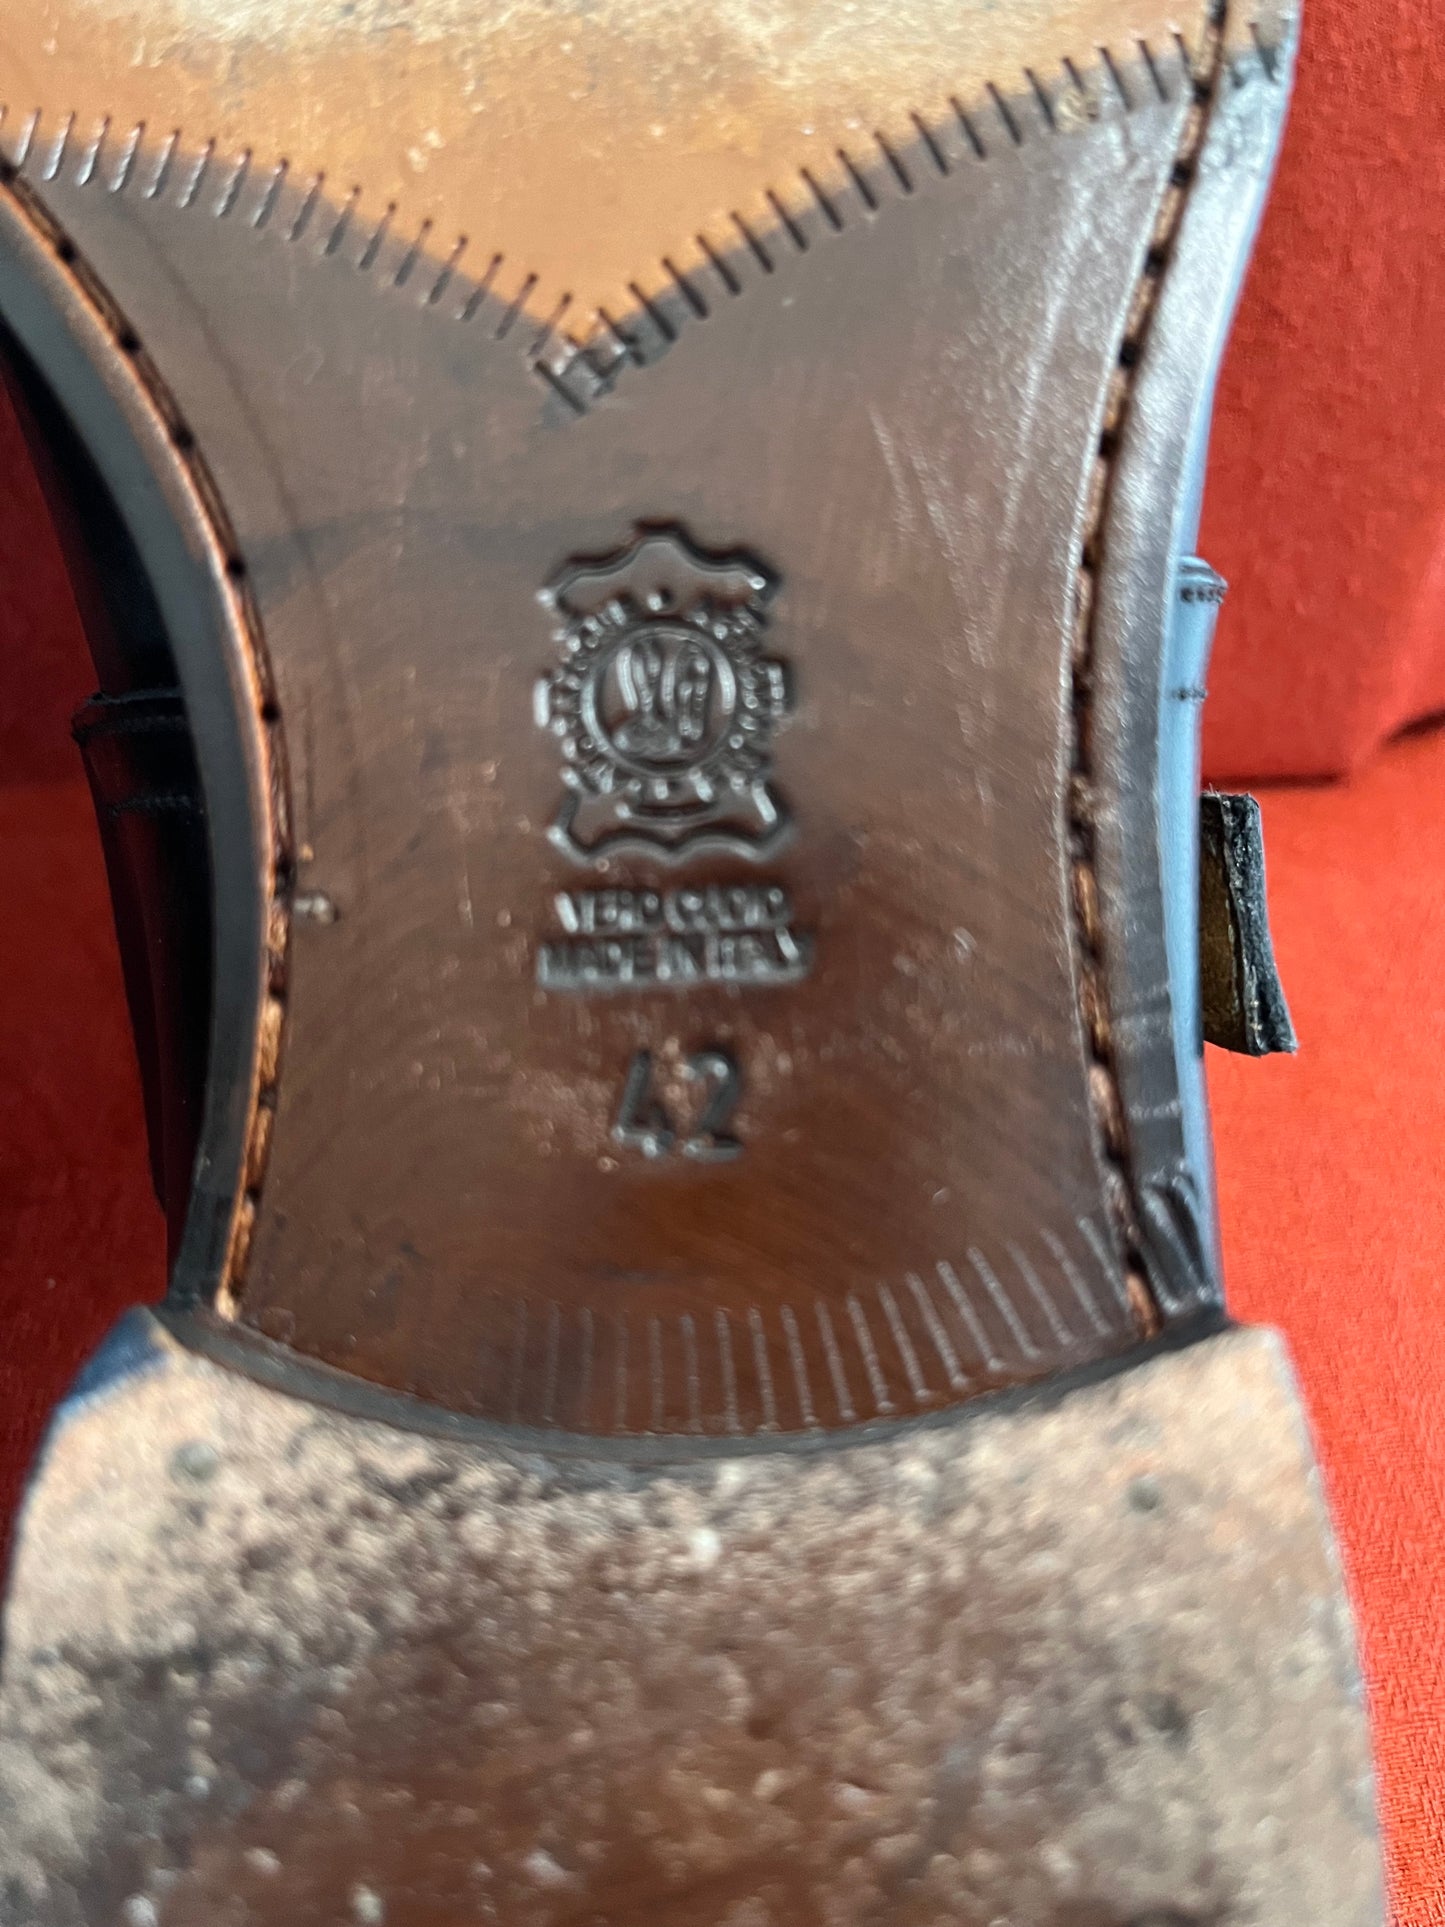 Antonio Maurizi Italian Leather Side Buckle Men's Shoe-Size 42 (US 9)